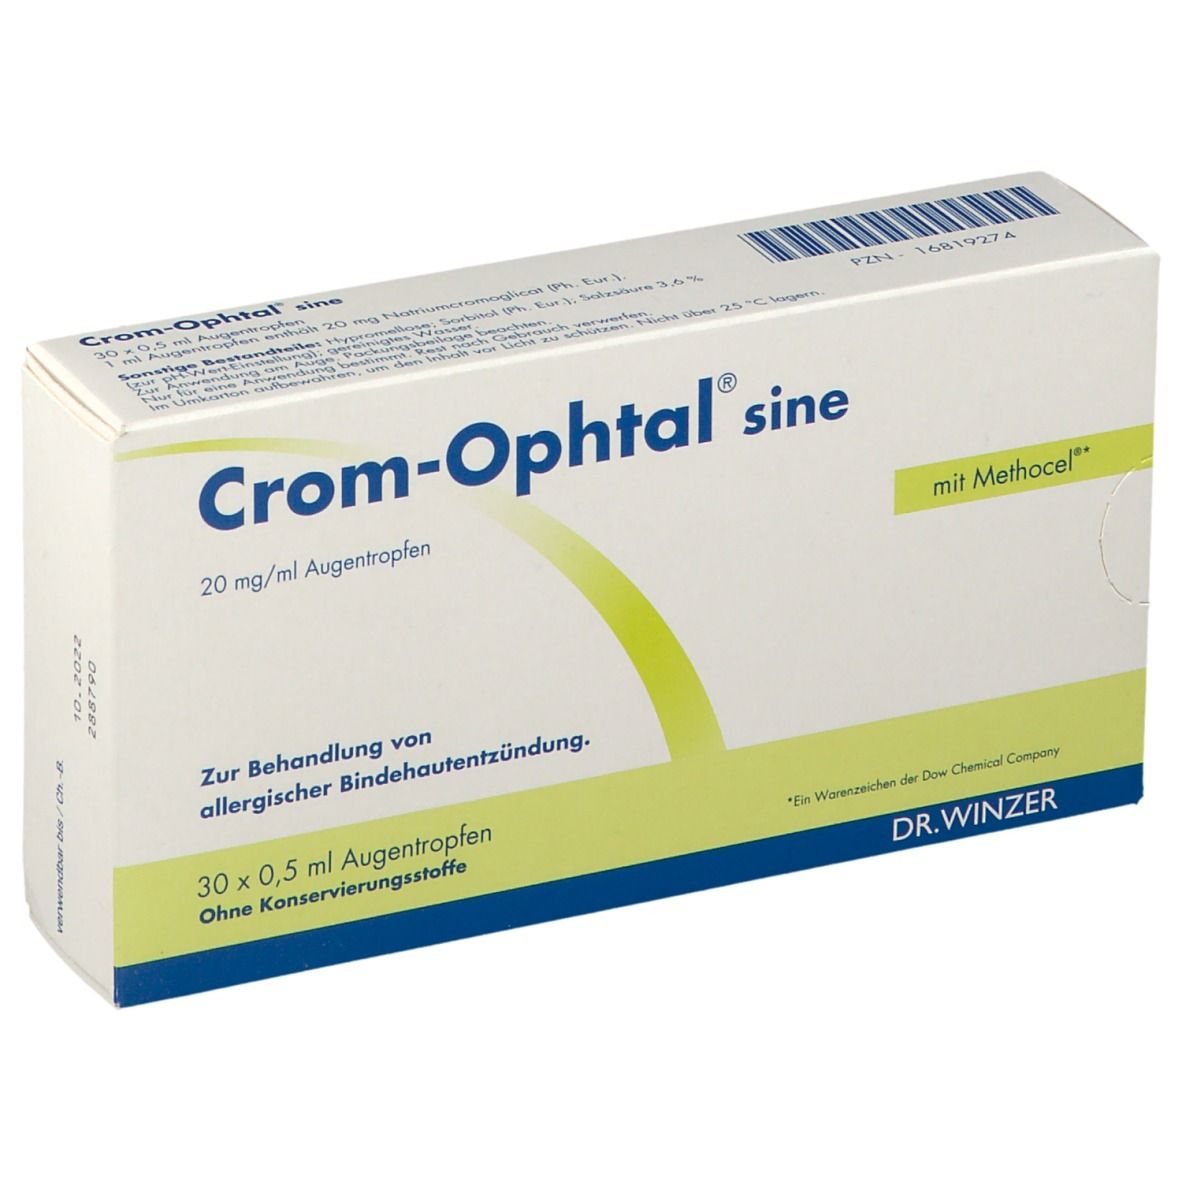 Crom-Opthal® sine